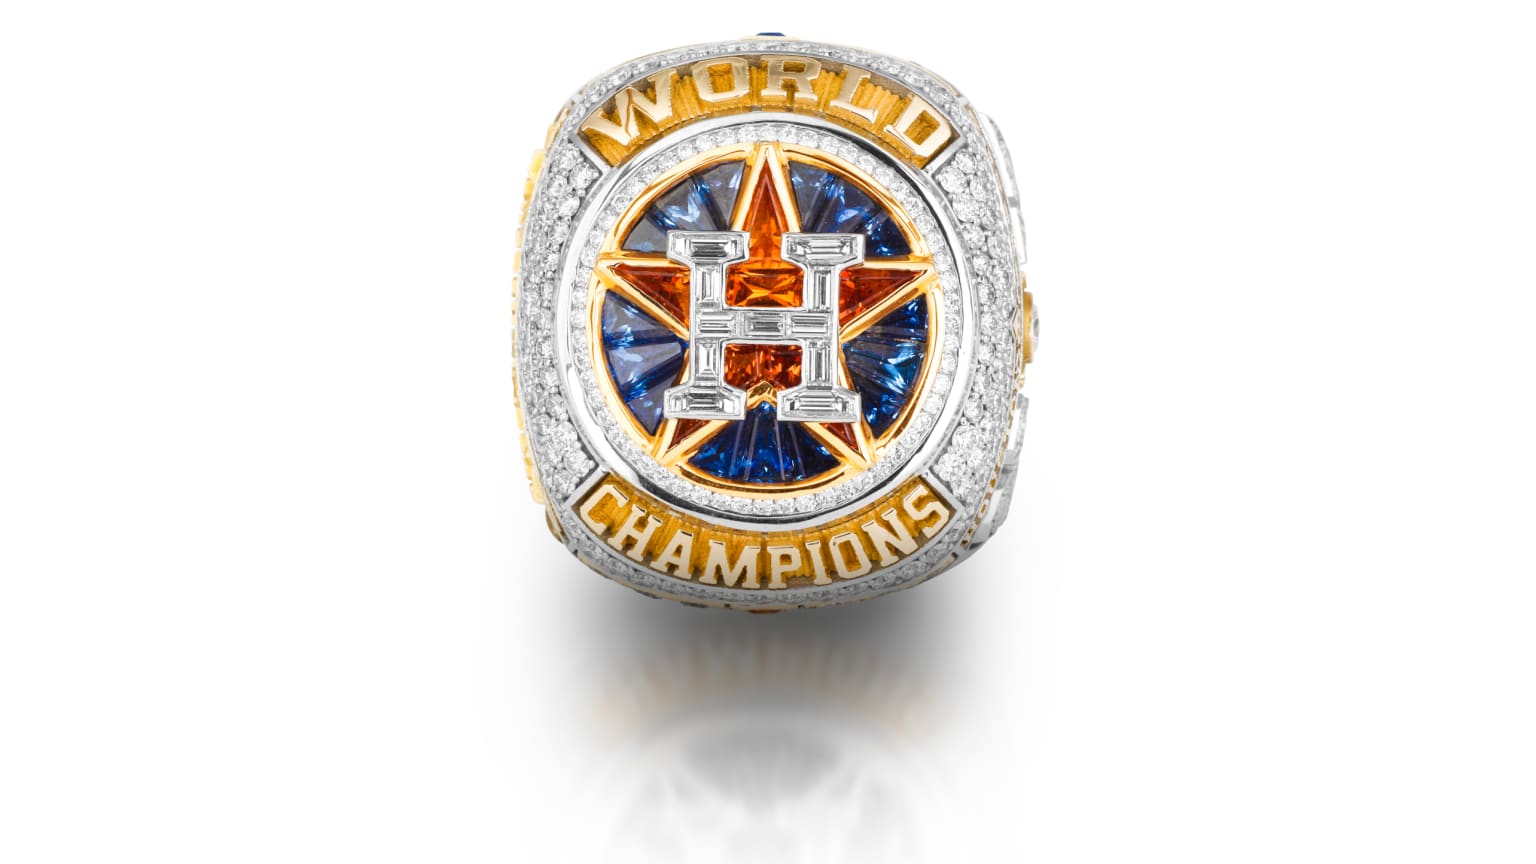 2022 2017 Houston Astros ring world Series Baseball championship ring